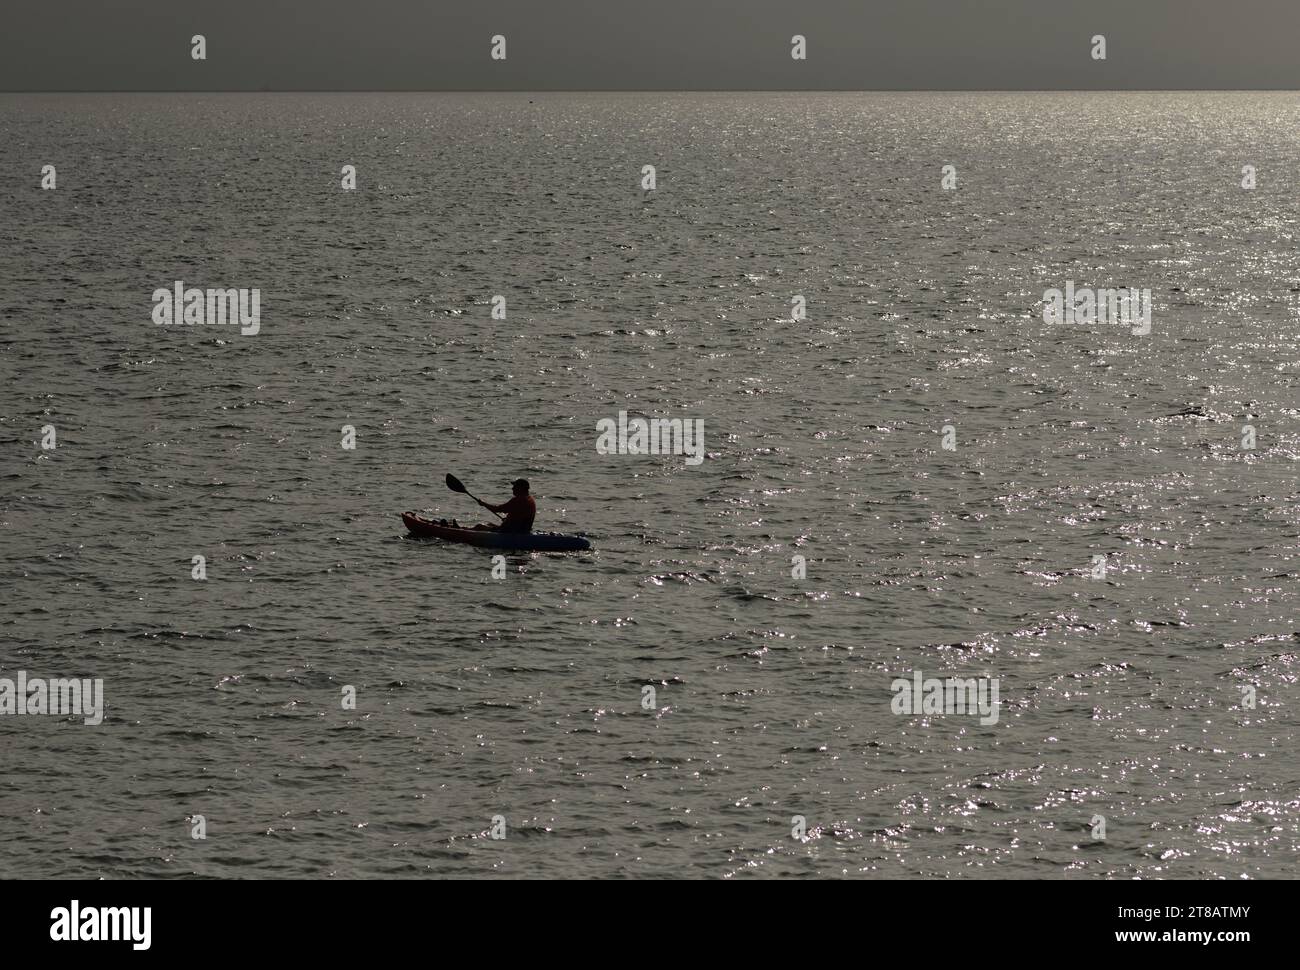 A lone canoeist in an open sea. Stock Photo